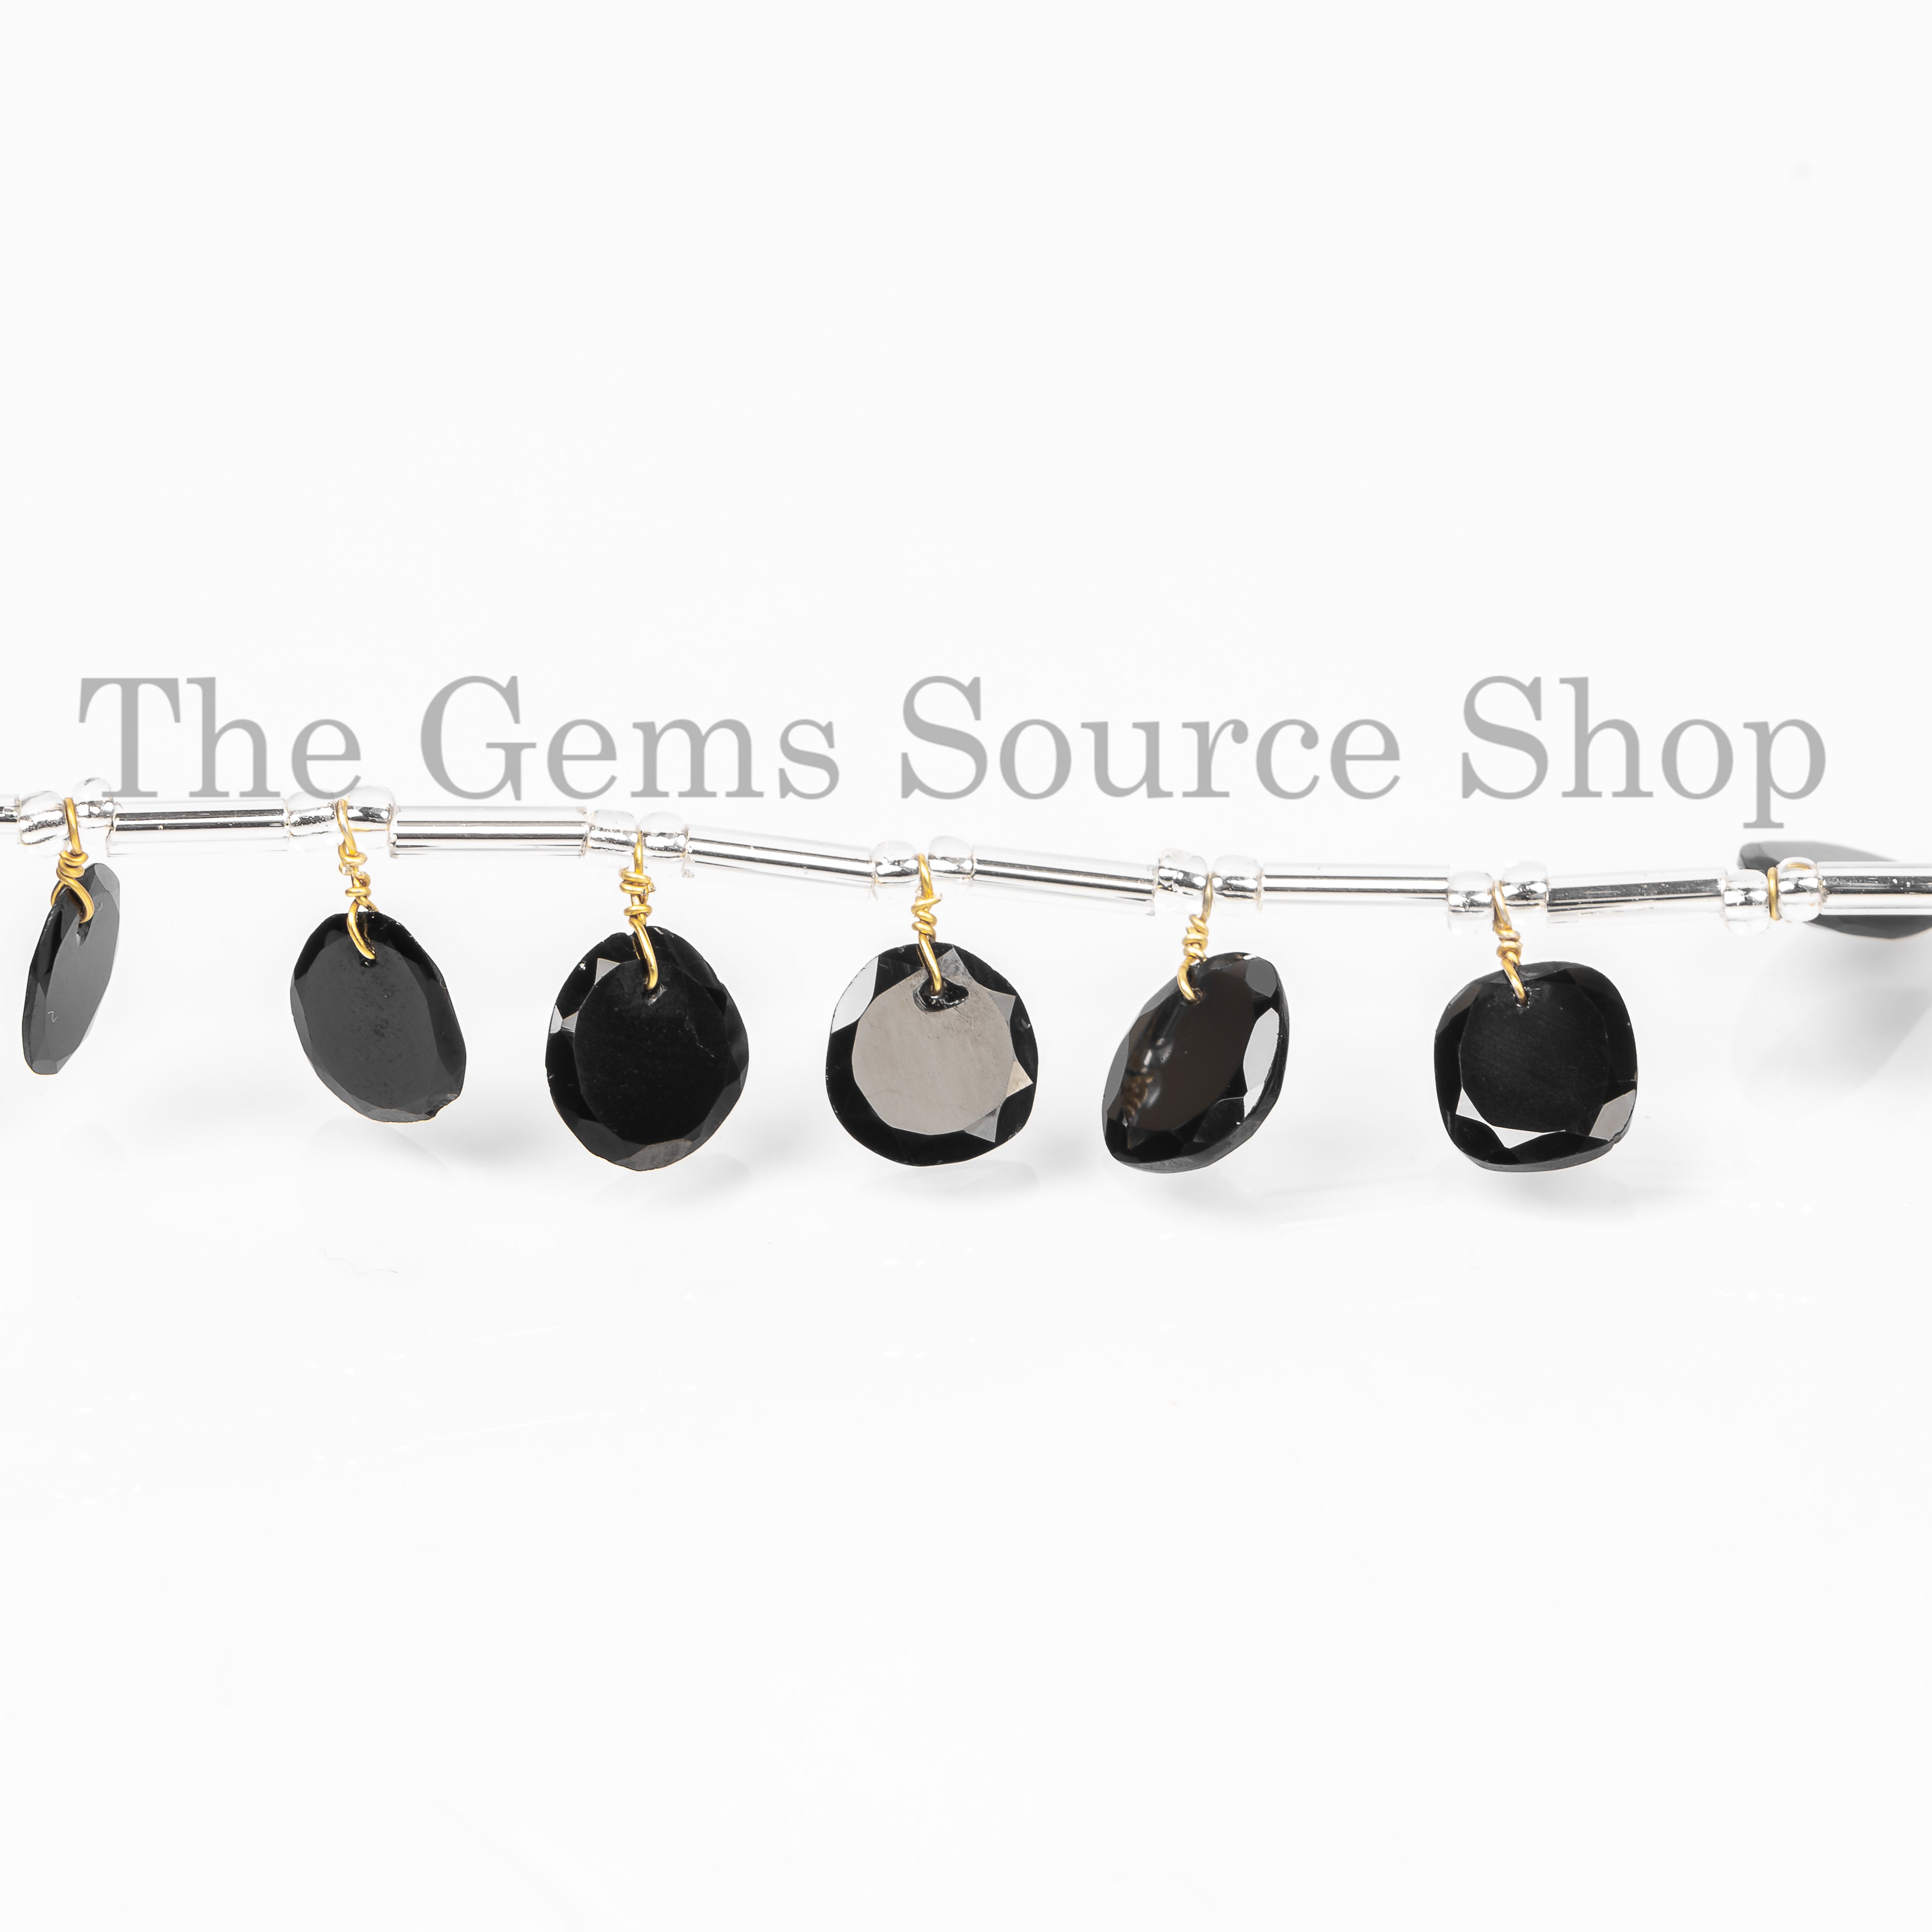 Black Spinel Rose Cut Beads, Gemstone Beads, Black Spinel Beads, Fancy Beads, Front to Back Drill Beads, Rose Cut Beads, Loose Beads